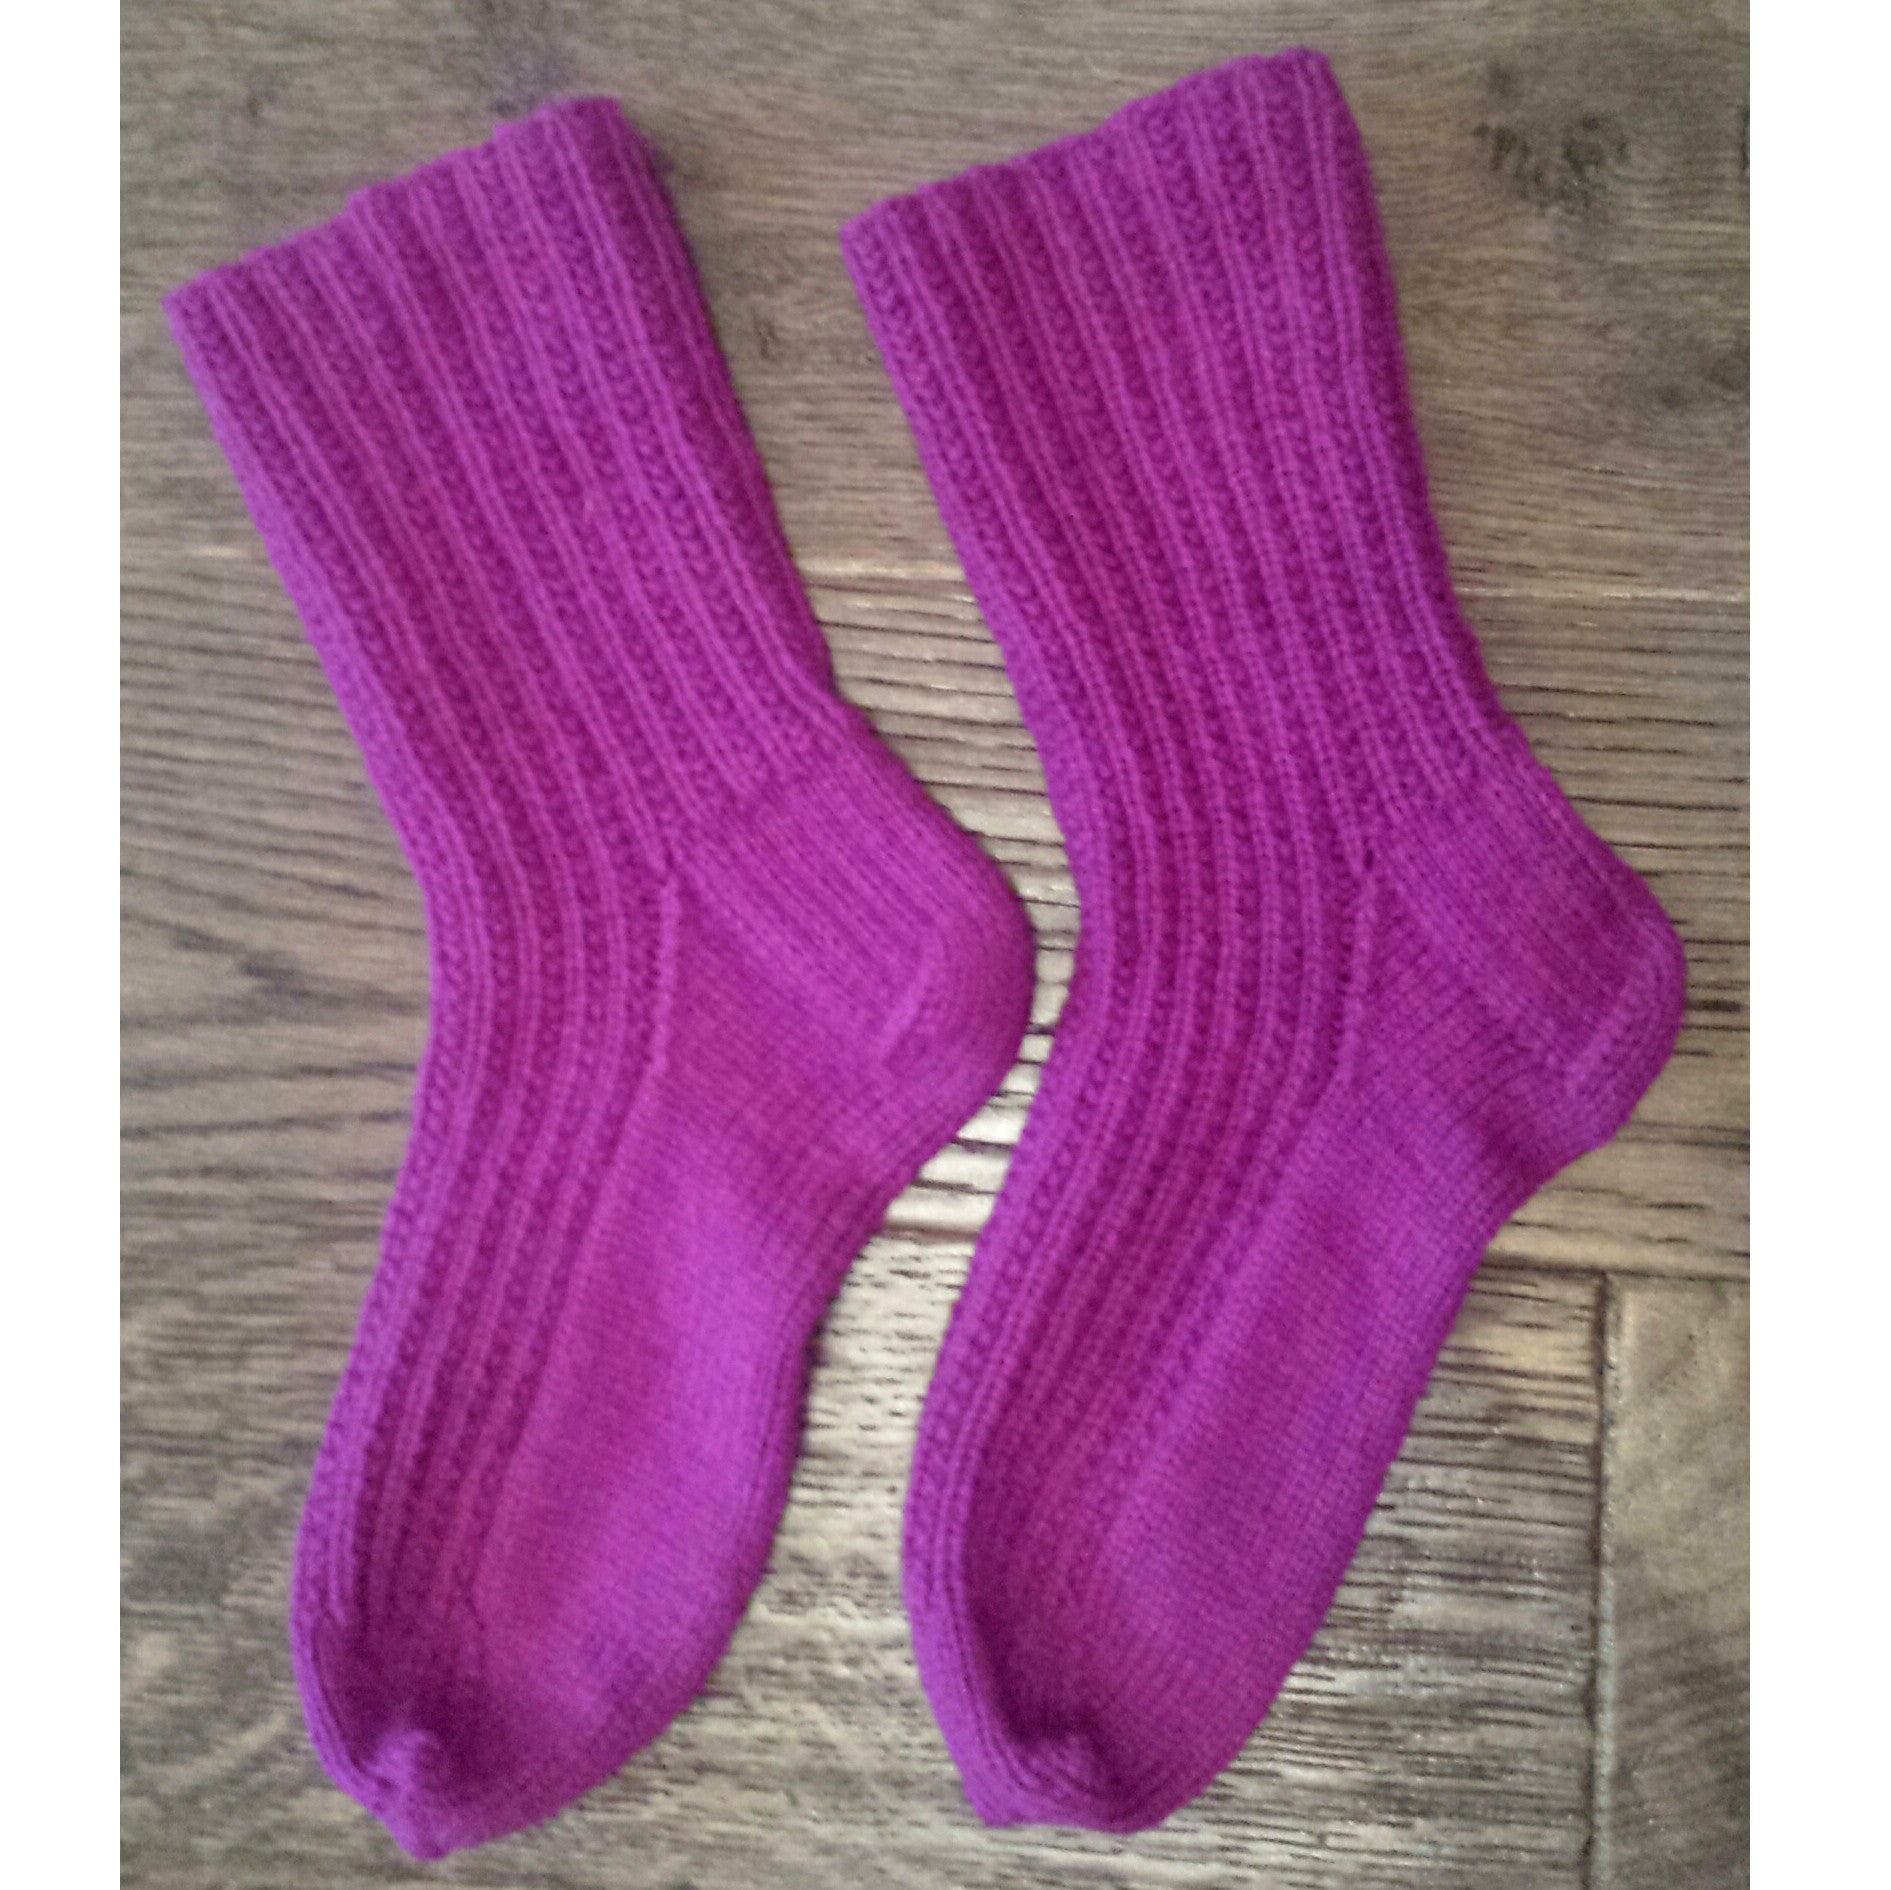 knitty gritty socks {knitting pattern}-knitting pattern-The Crafty Jackalope